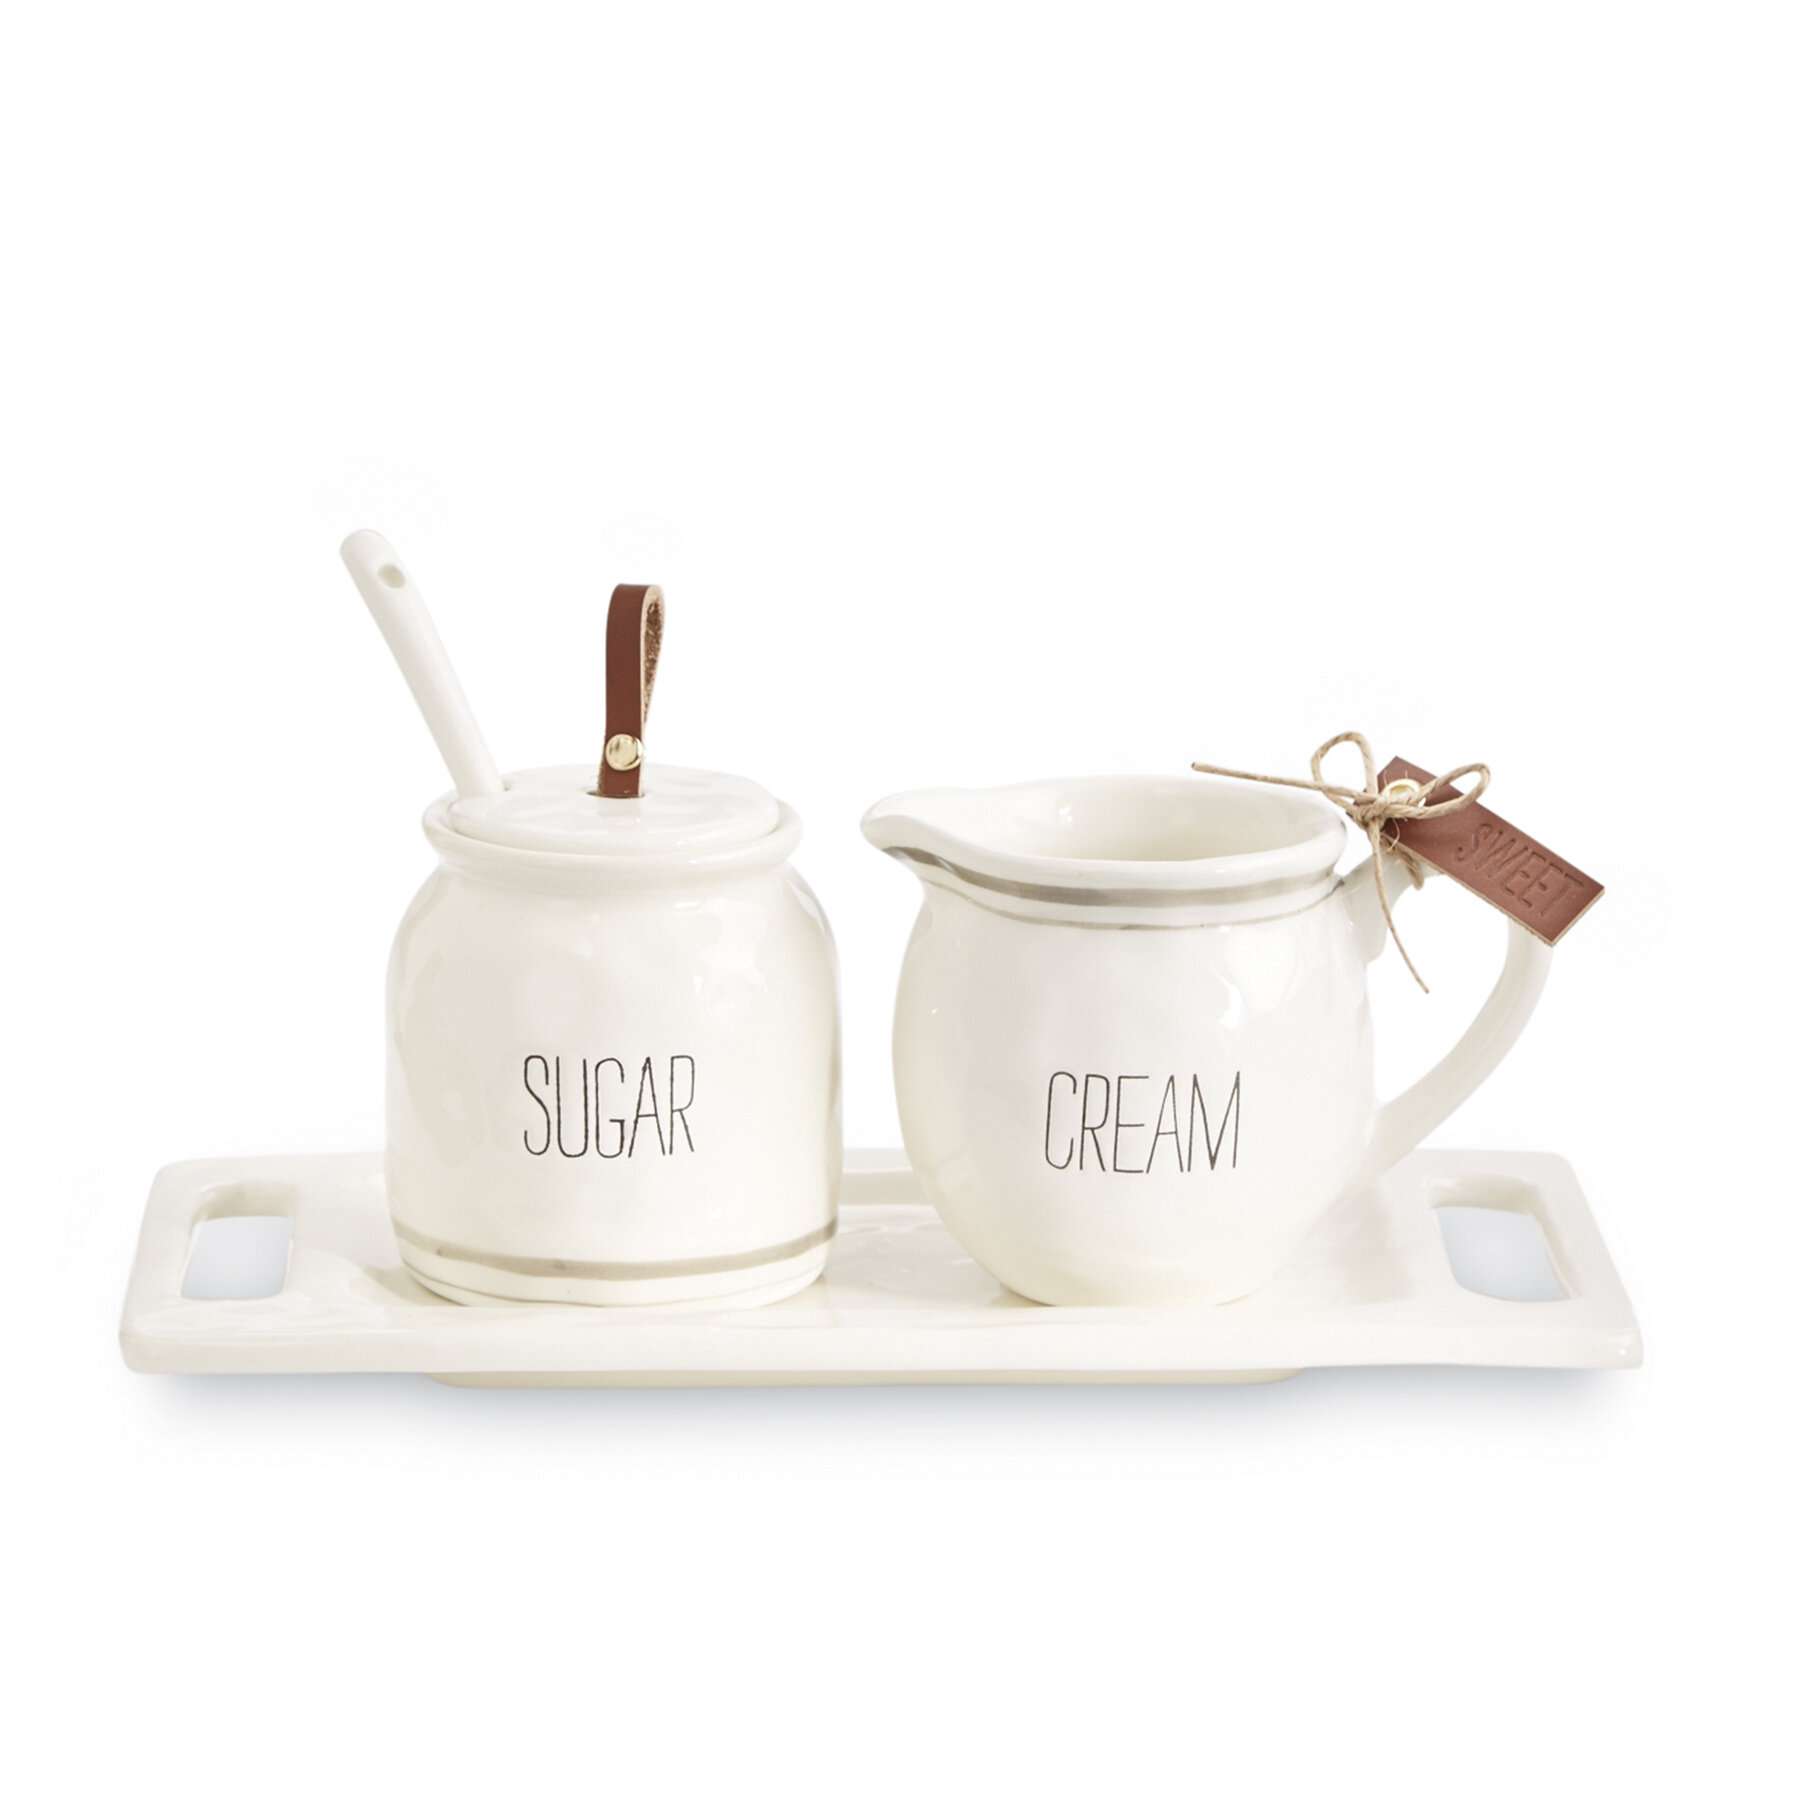 Sugar set. Сервировочный набор сахарница и молочник. Чай в сахарнице. Ceramic Sugar Bowl with Spoon. Tea Sugar.